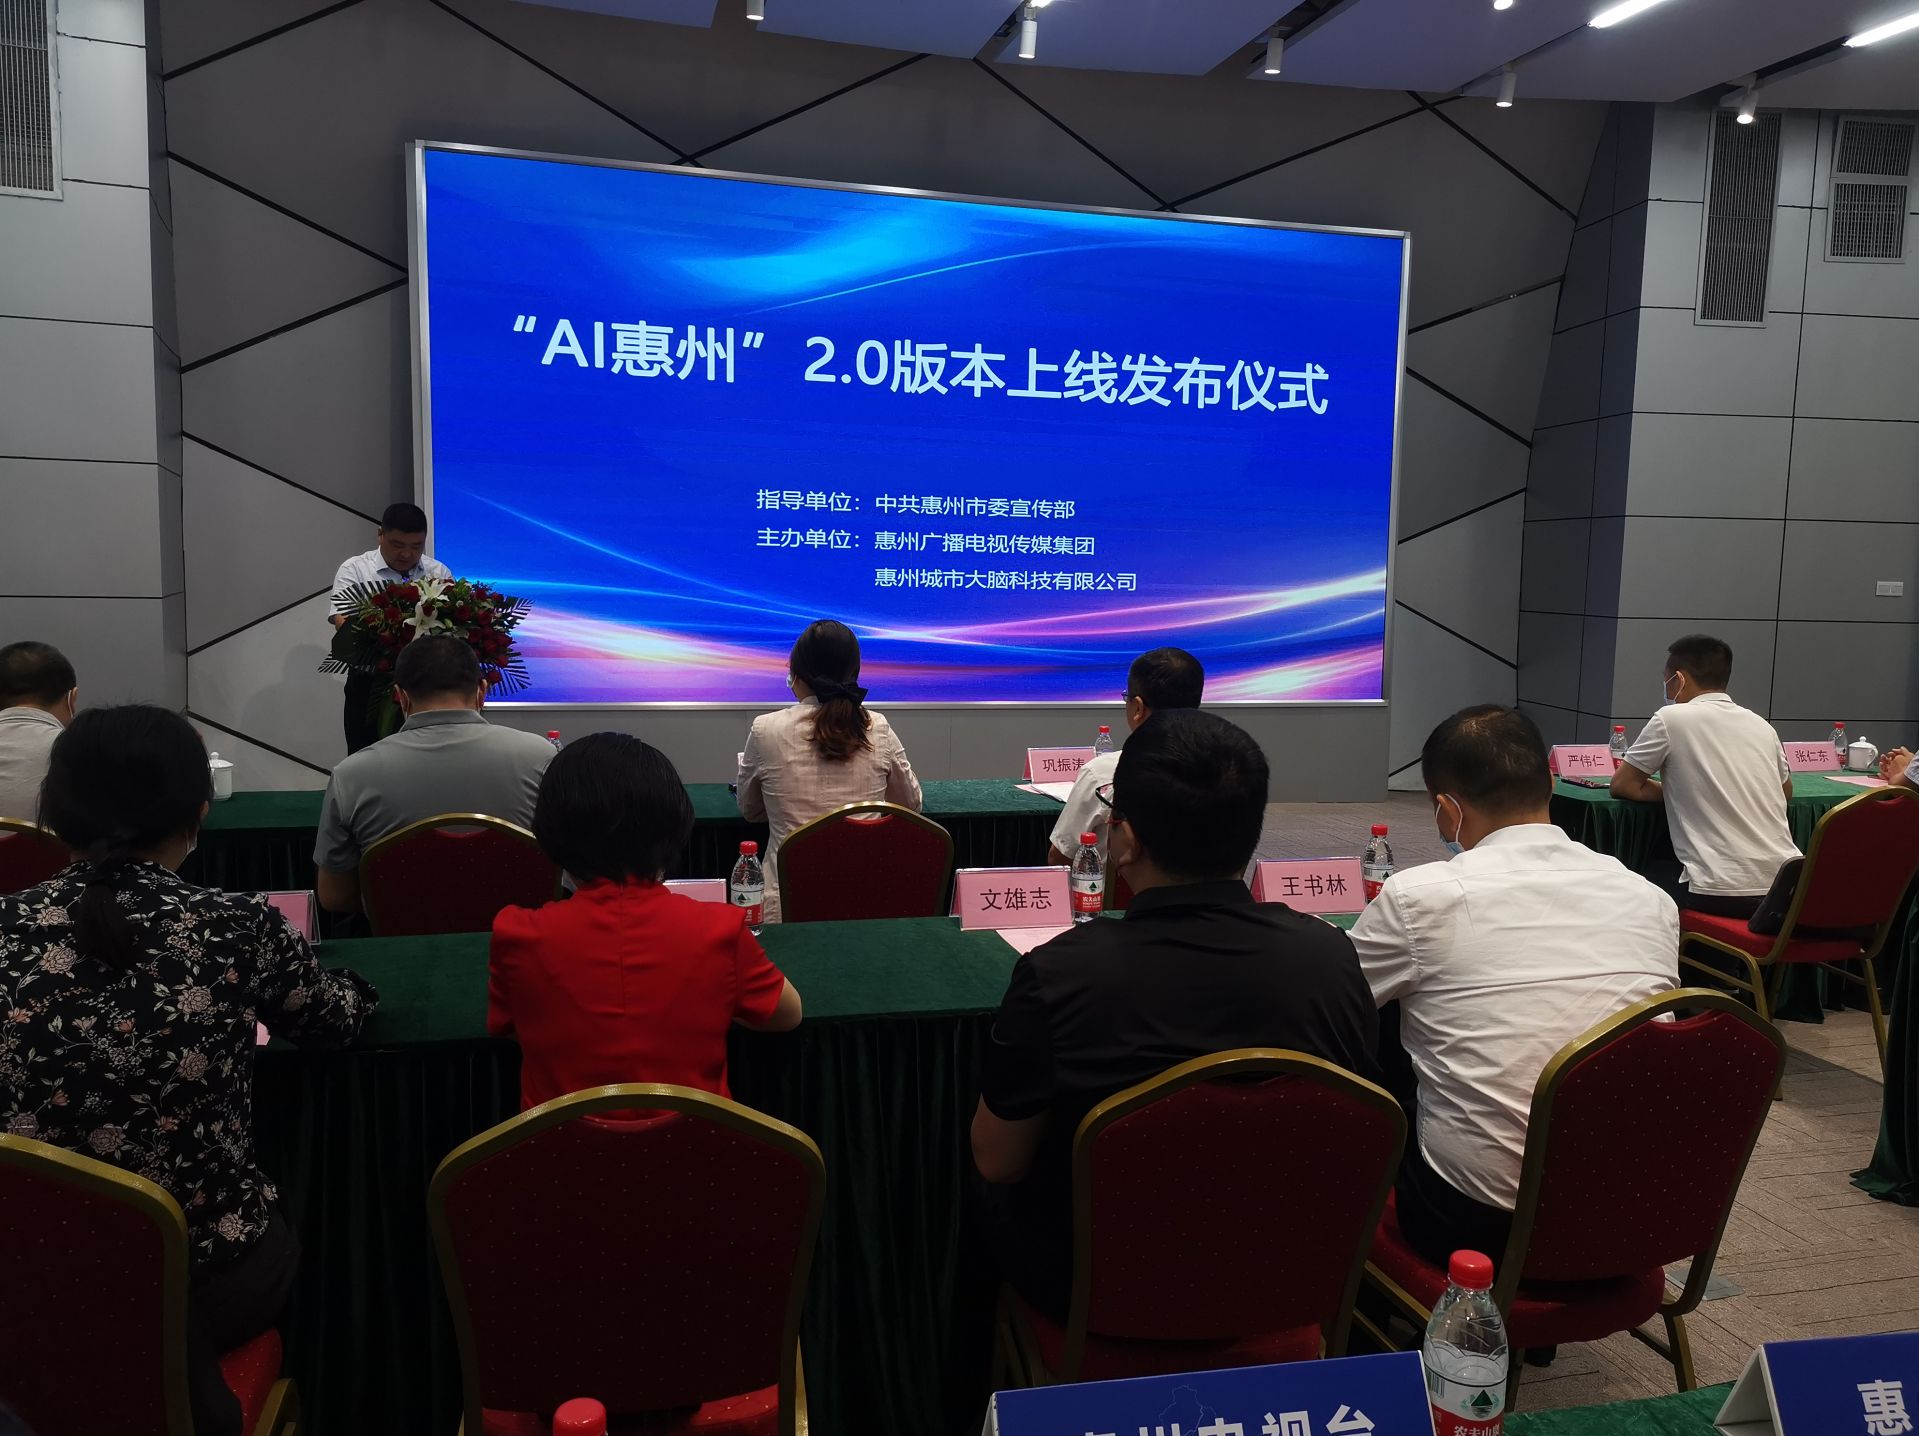 ​“AI惠州”2.0版本上线发布 “一码通行”赋能场所码推广应用   